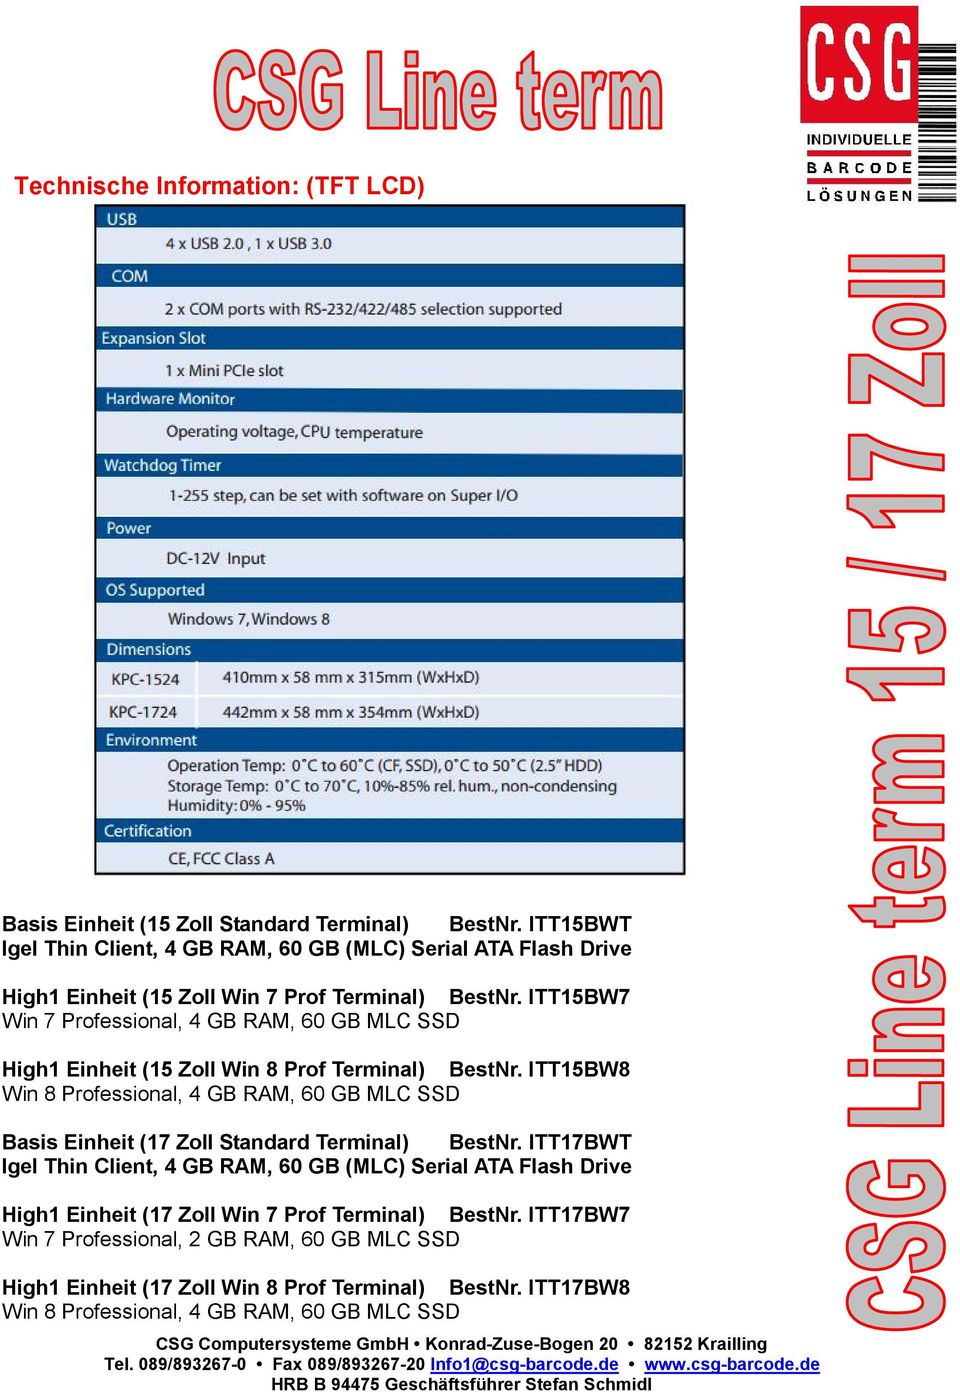 ITT15BW7 Win 7 Professional, 4 GB RAM, 60 GB MLC SSD High1 Einheit (15 Zoll Win 8 Prof Terminal) BestNr.